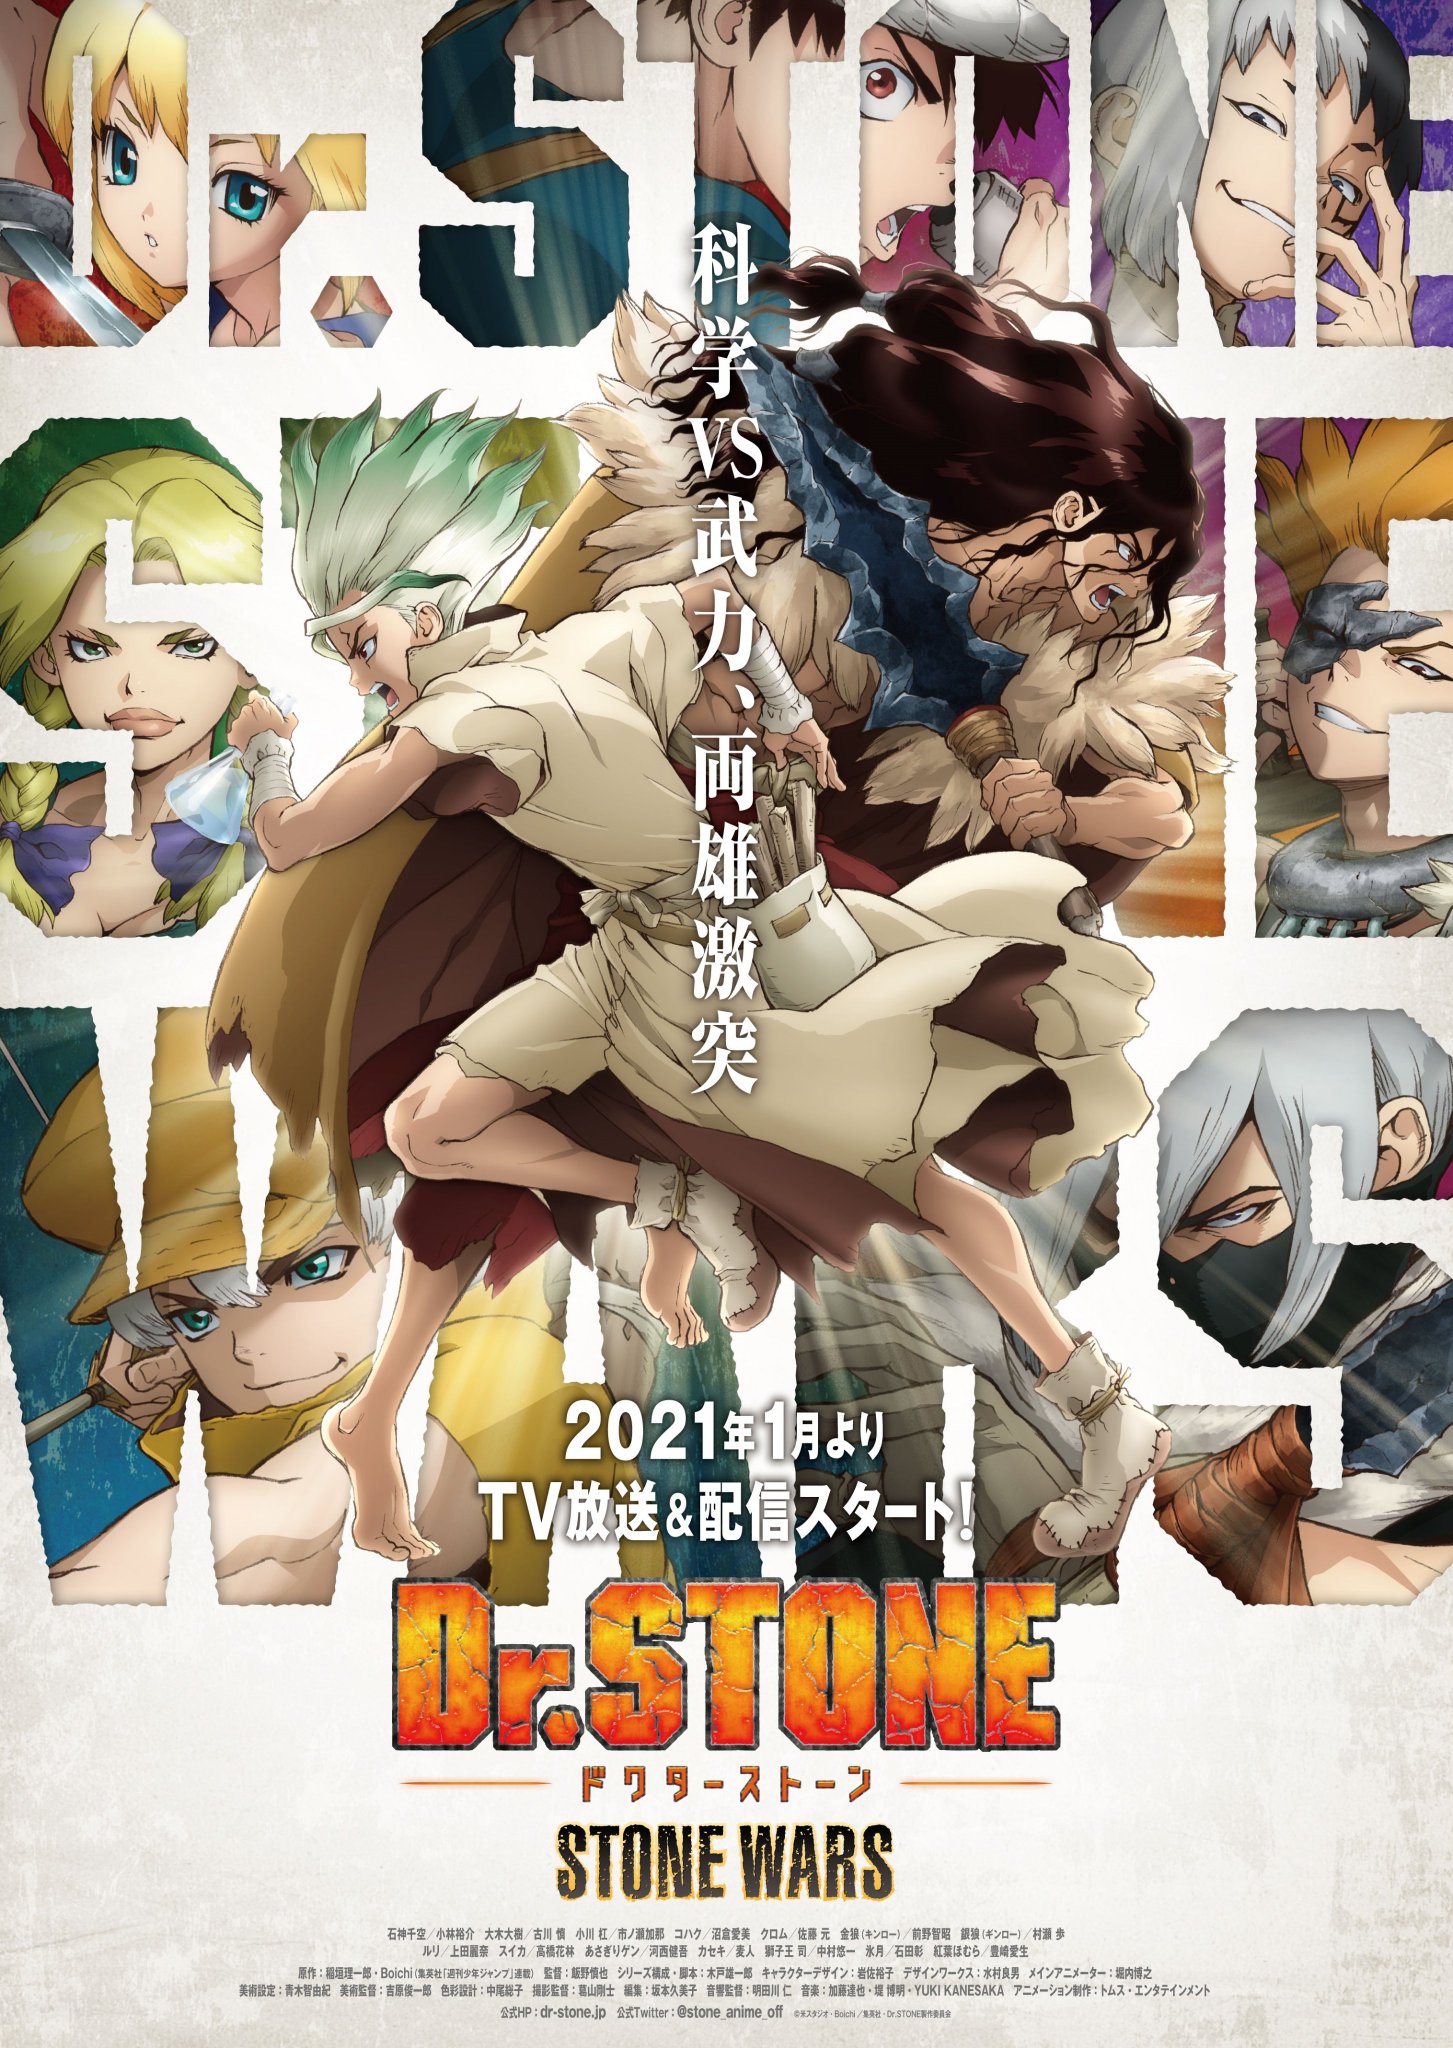 Dr. Stone: Stone Wars will premiere in January 2021, Fire Force Season